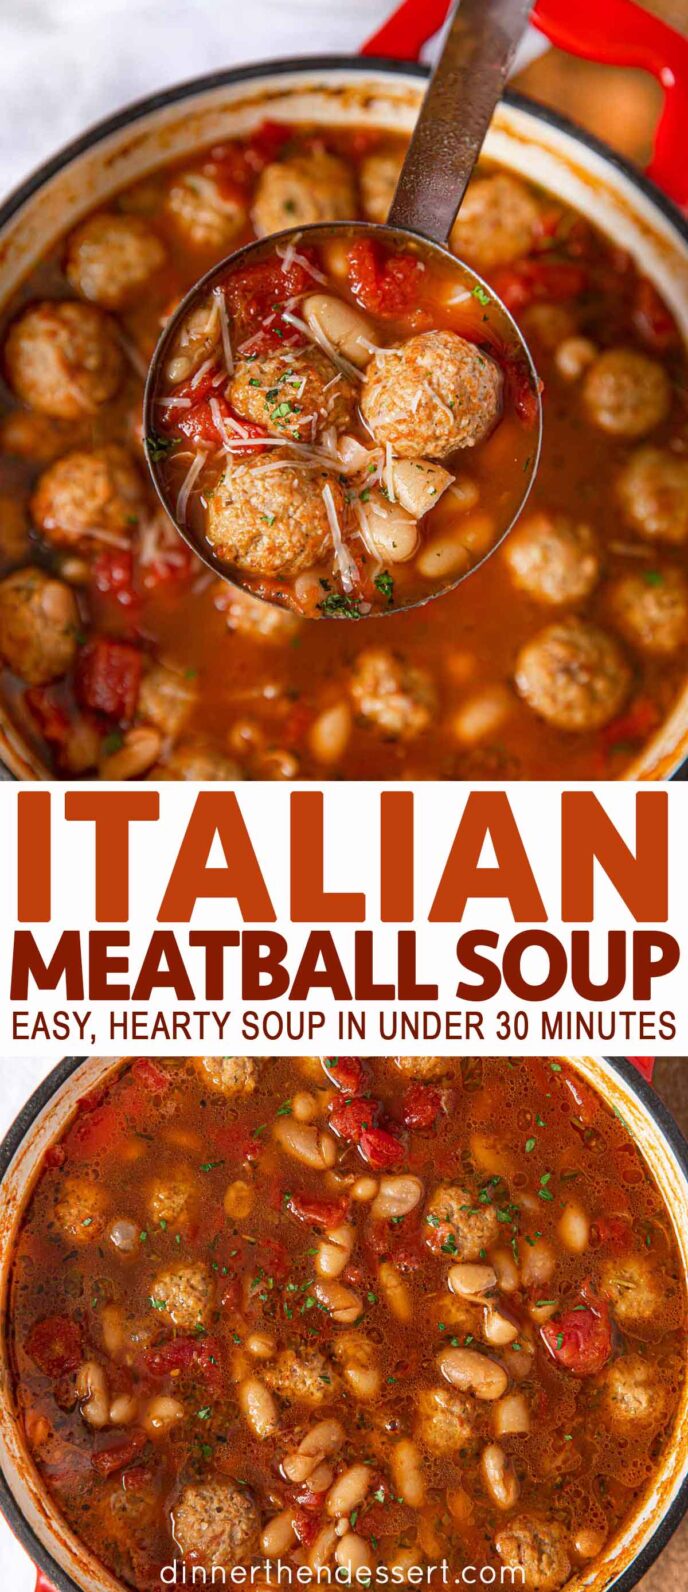 Collage photos of Italian Meatball Soup